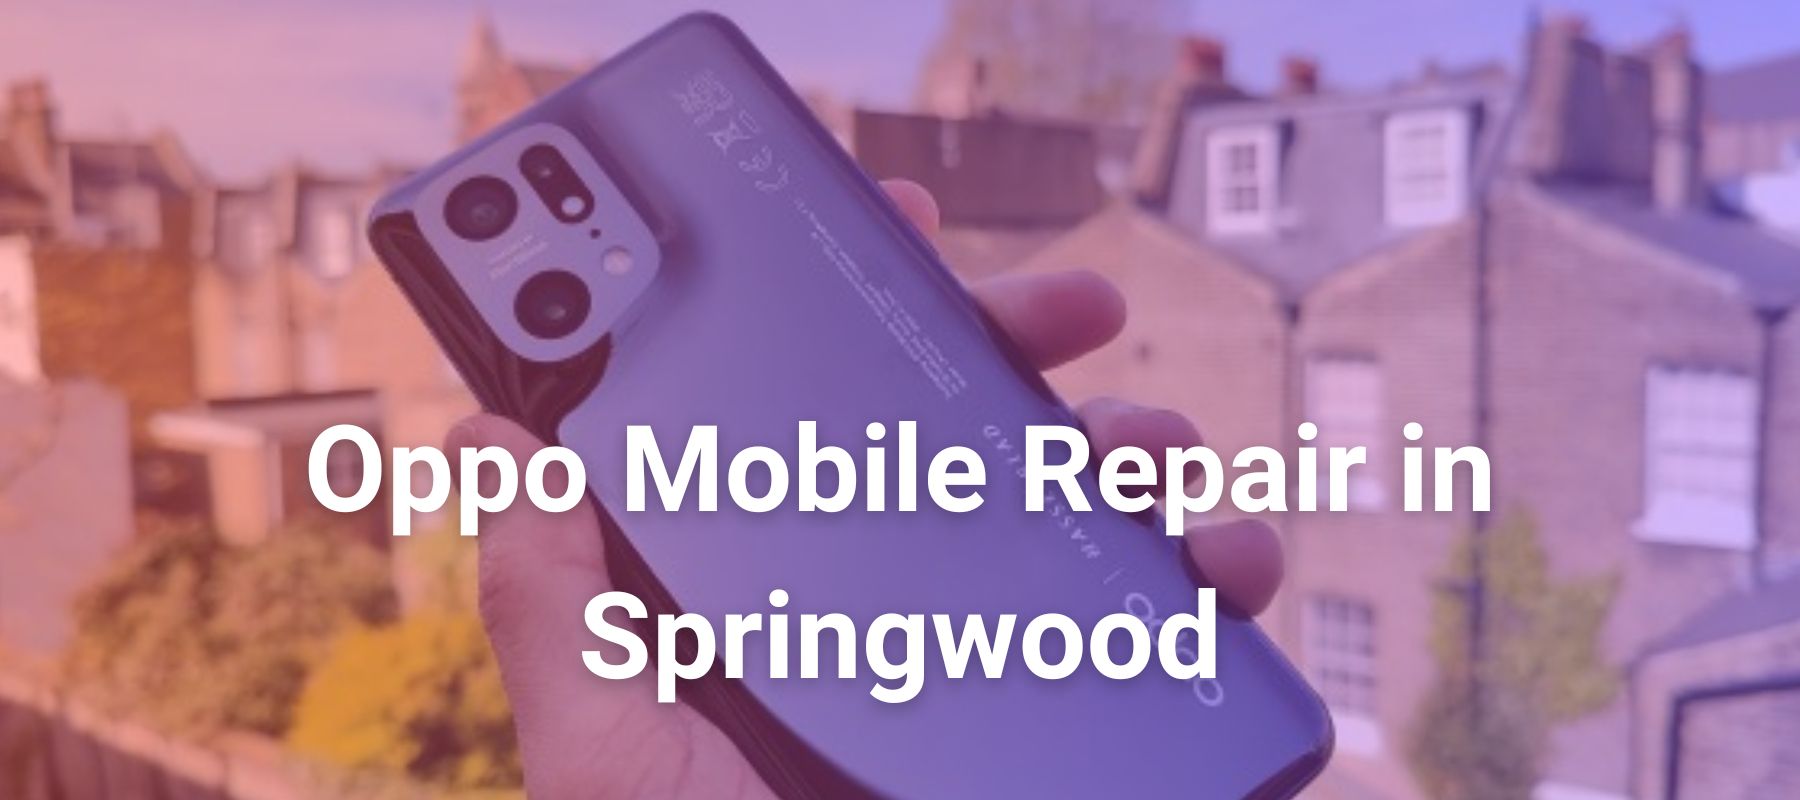 Oppo Mobile Repair in Springwood